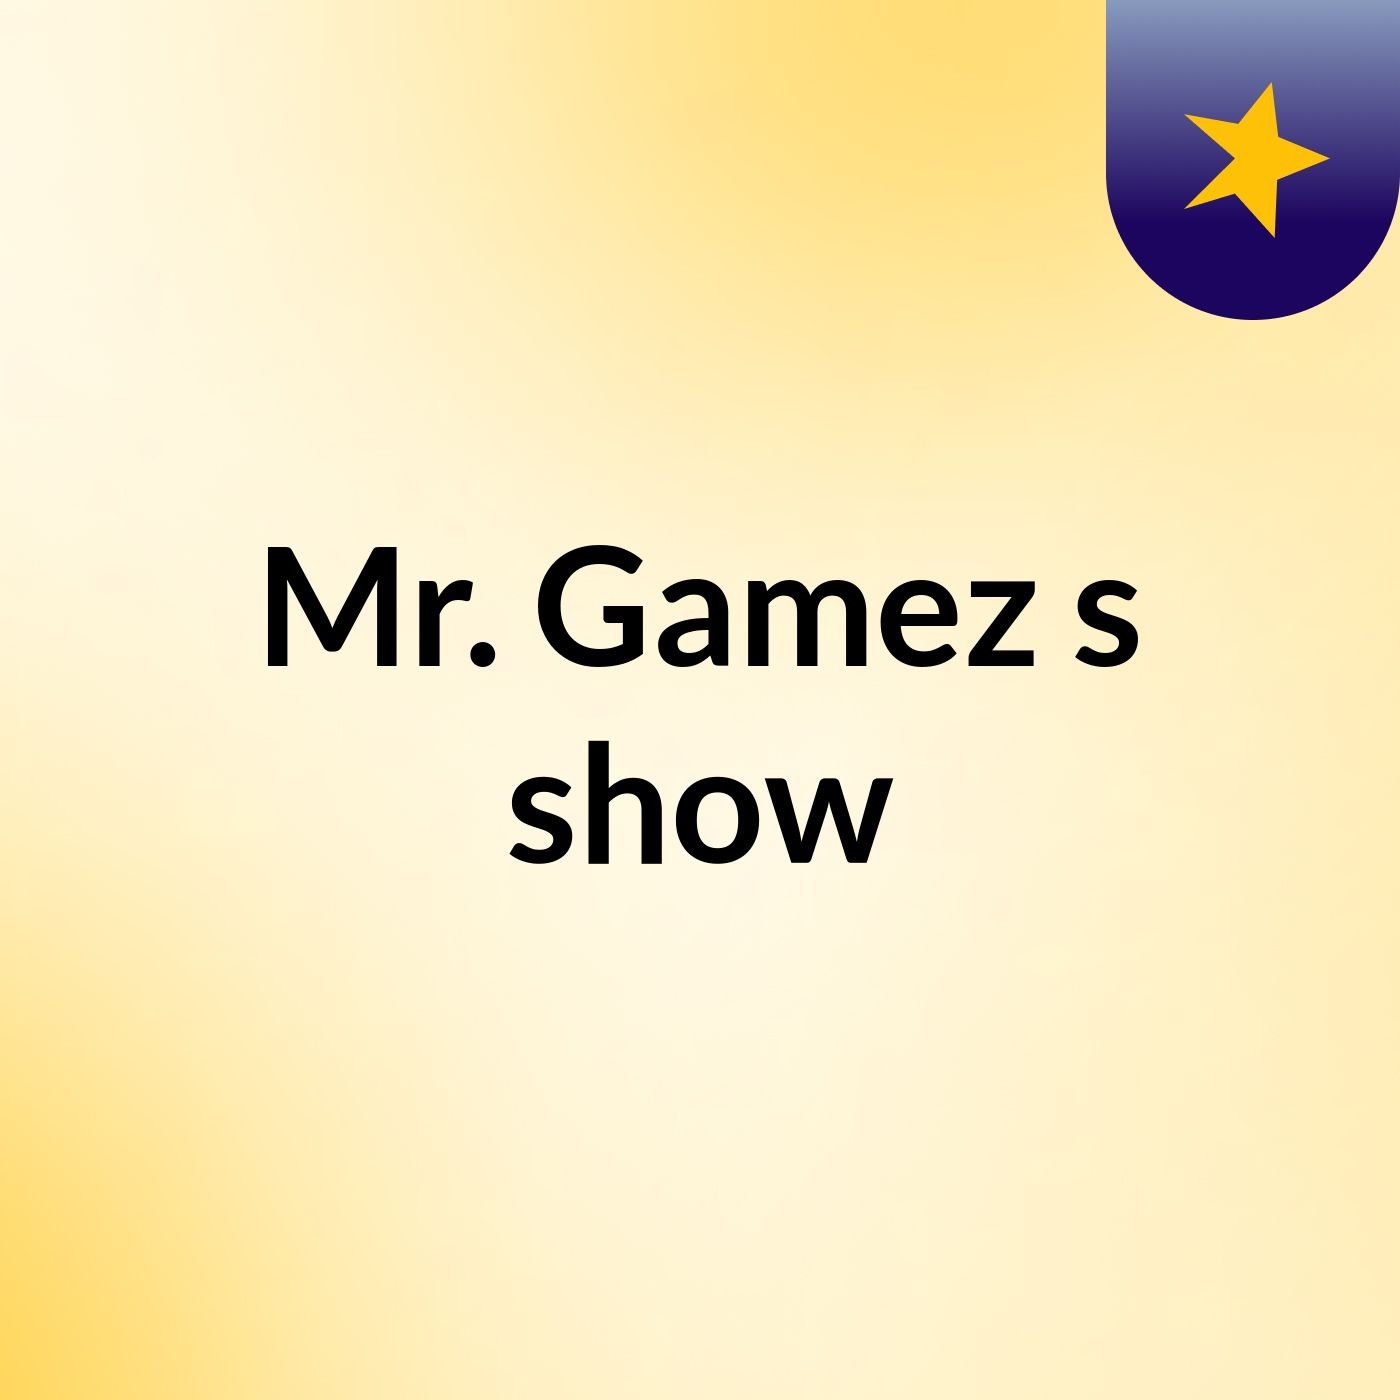 Mr. Gamez's show